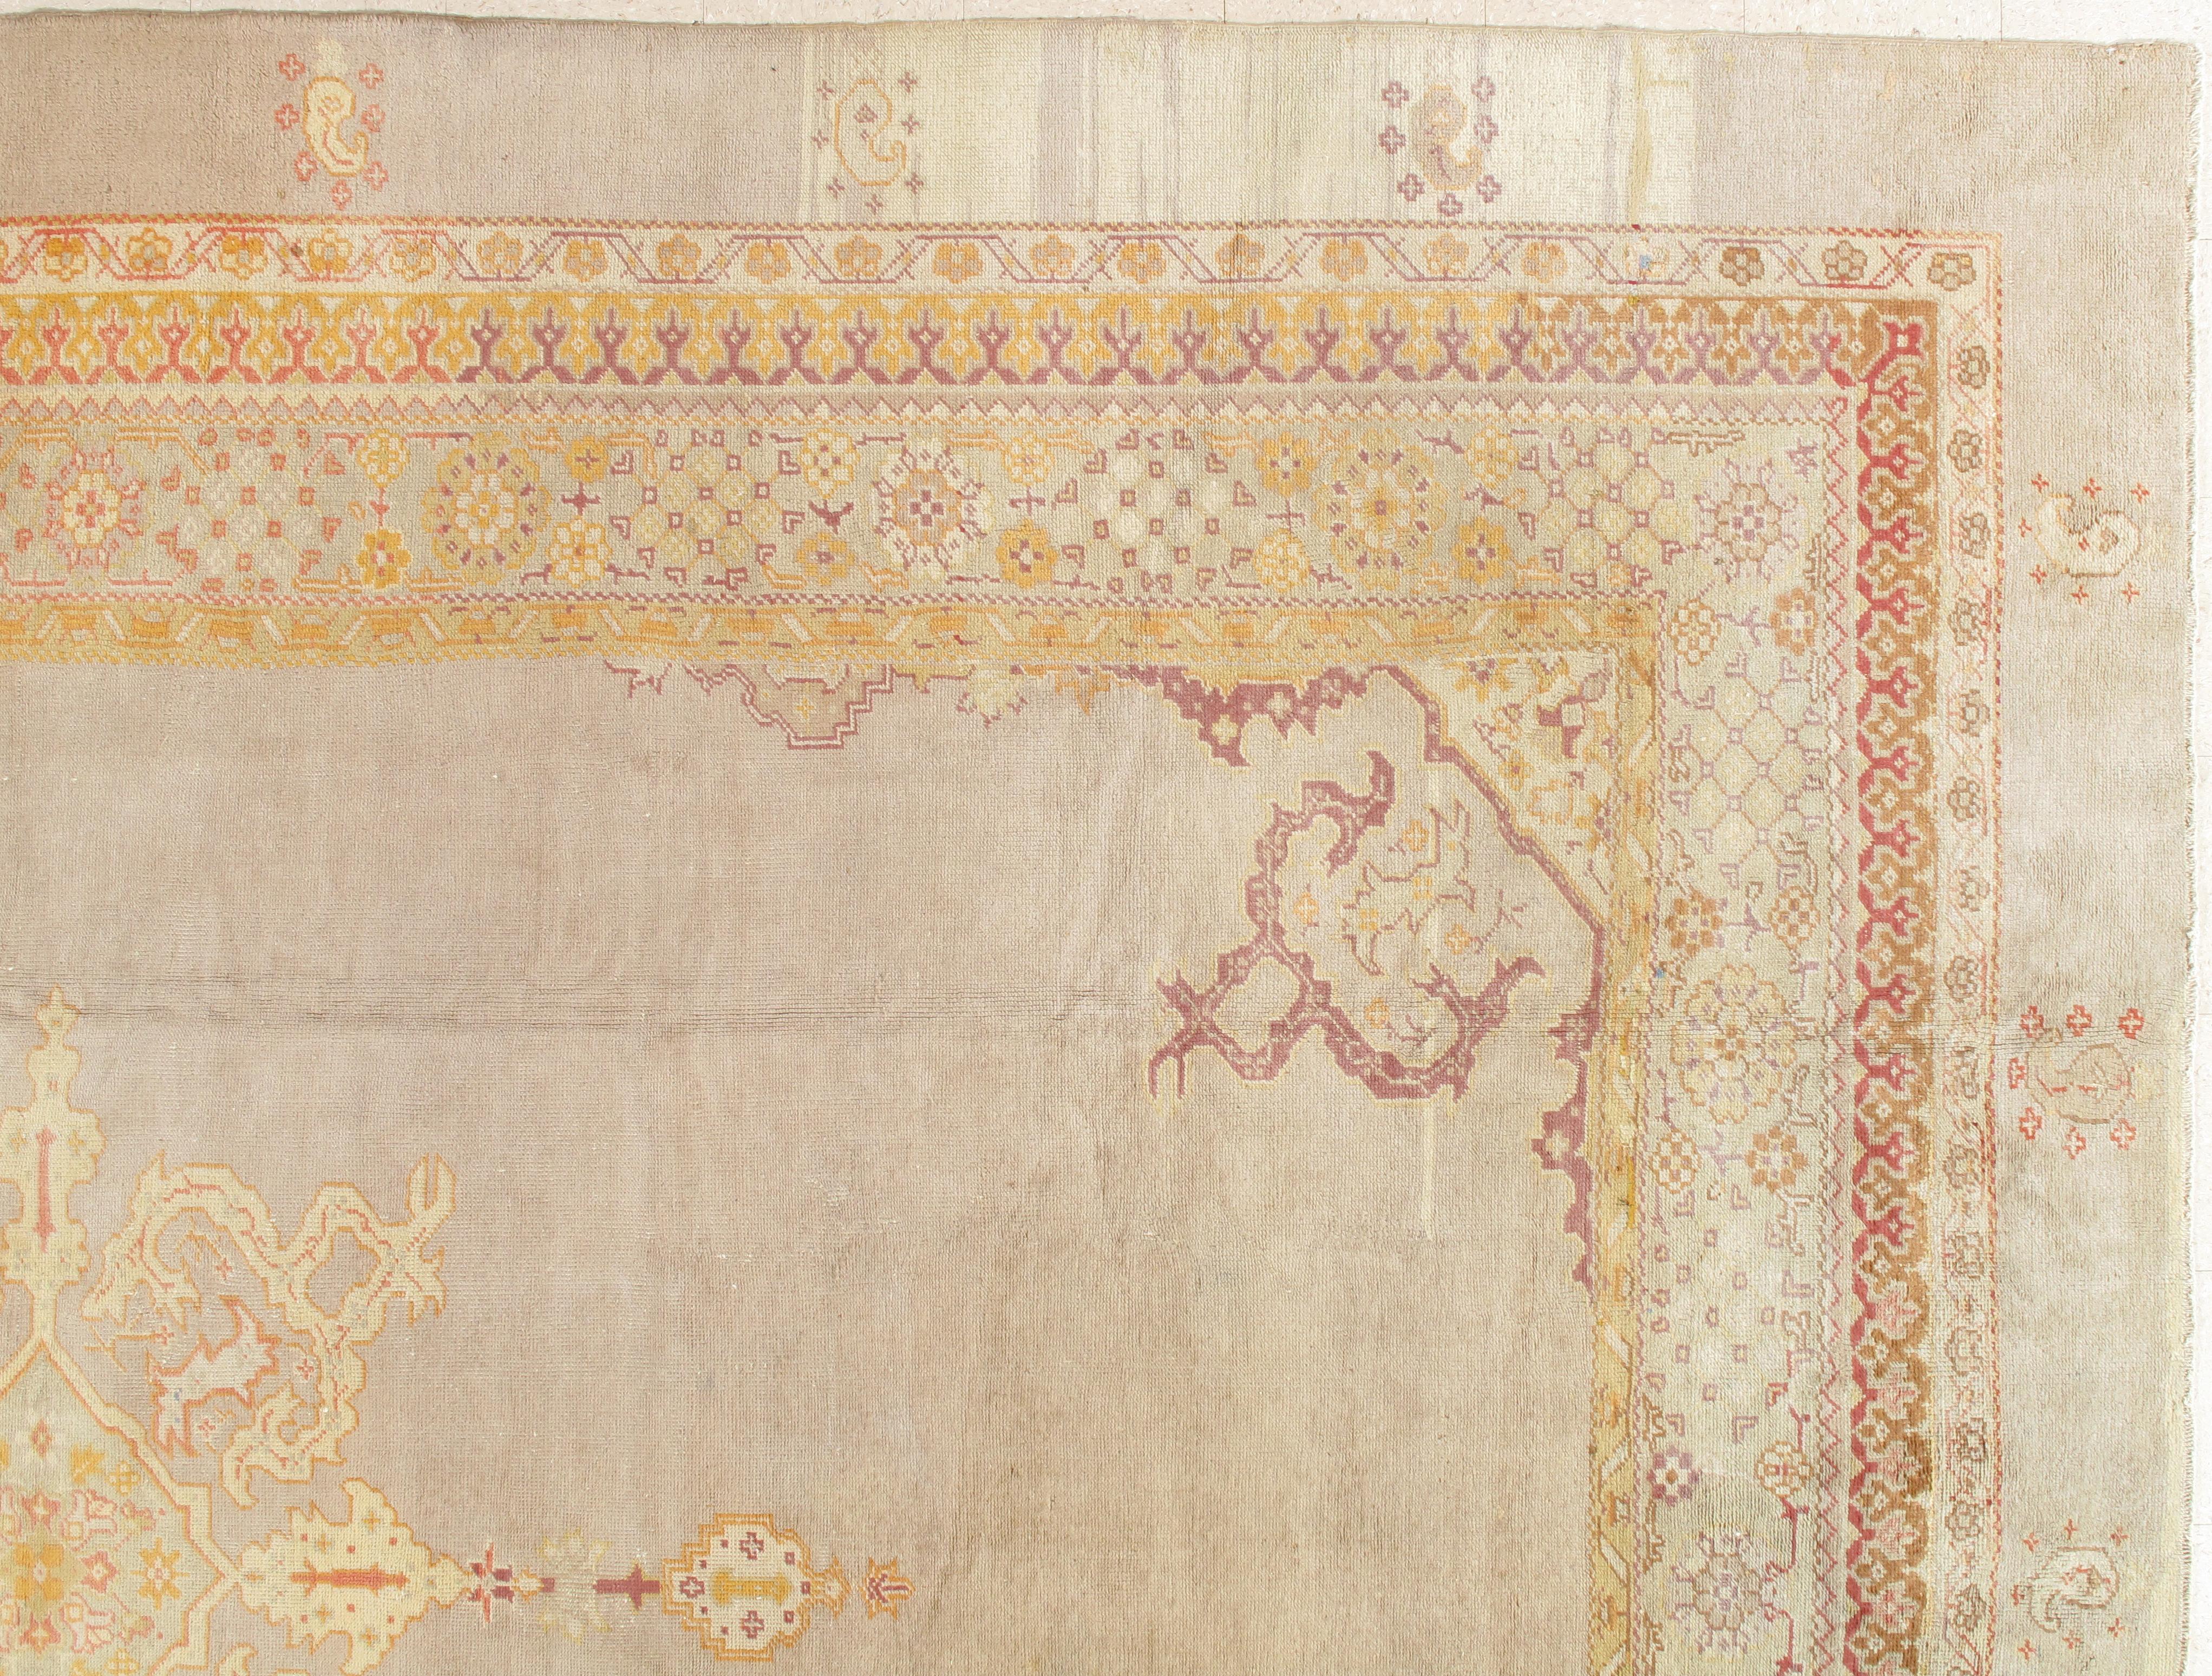 20th Century Antique Turkish Oushak Carpet, Handmade Oriental Rug, Gray, Taupe, Saffron Coral